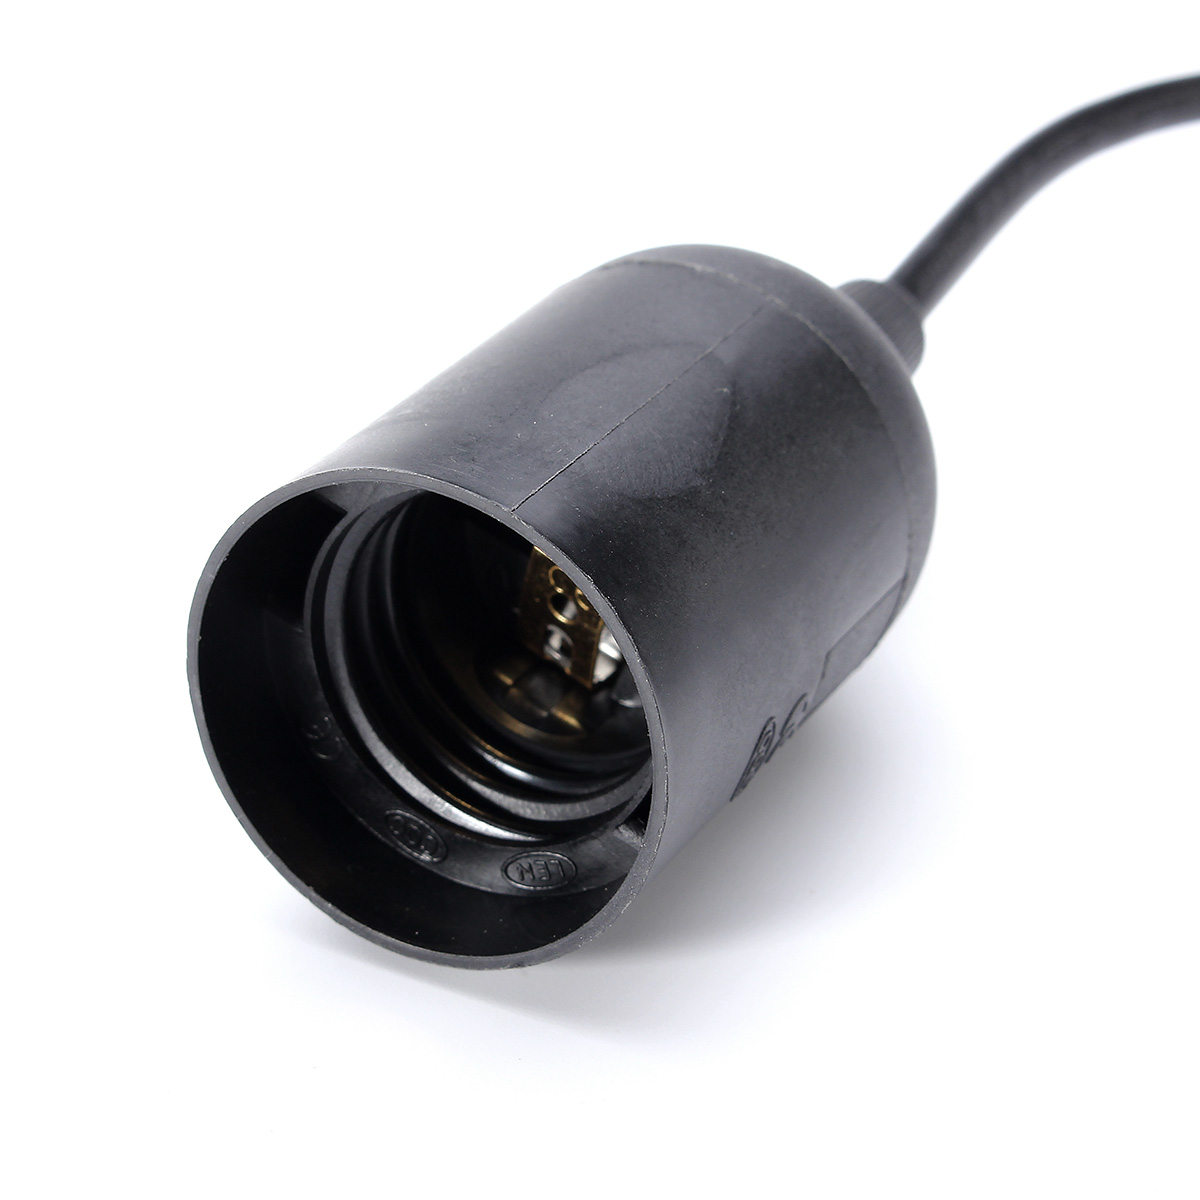 E27-Base-Lamp-Light-Bulb-Adapter-Holder-Socket-with-Switch-for-LED-Lighting-US-Plug-1122383